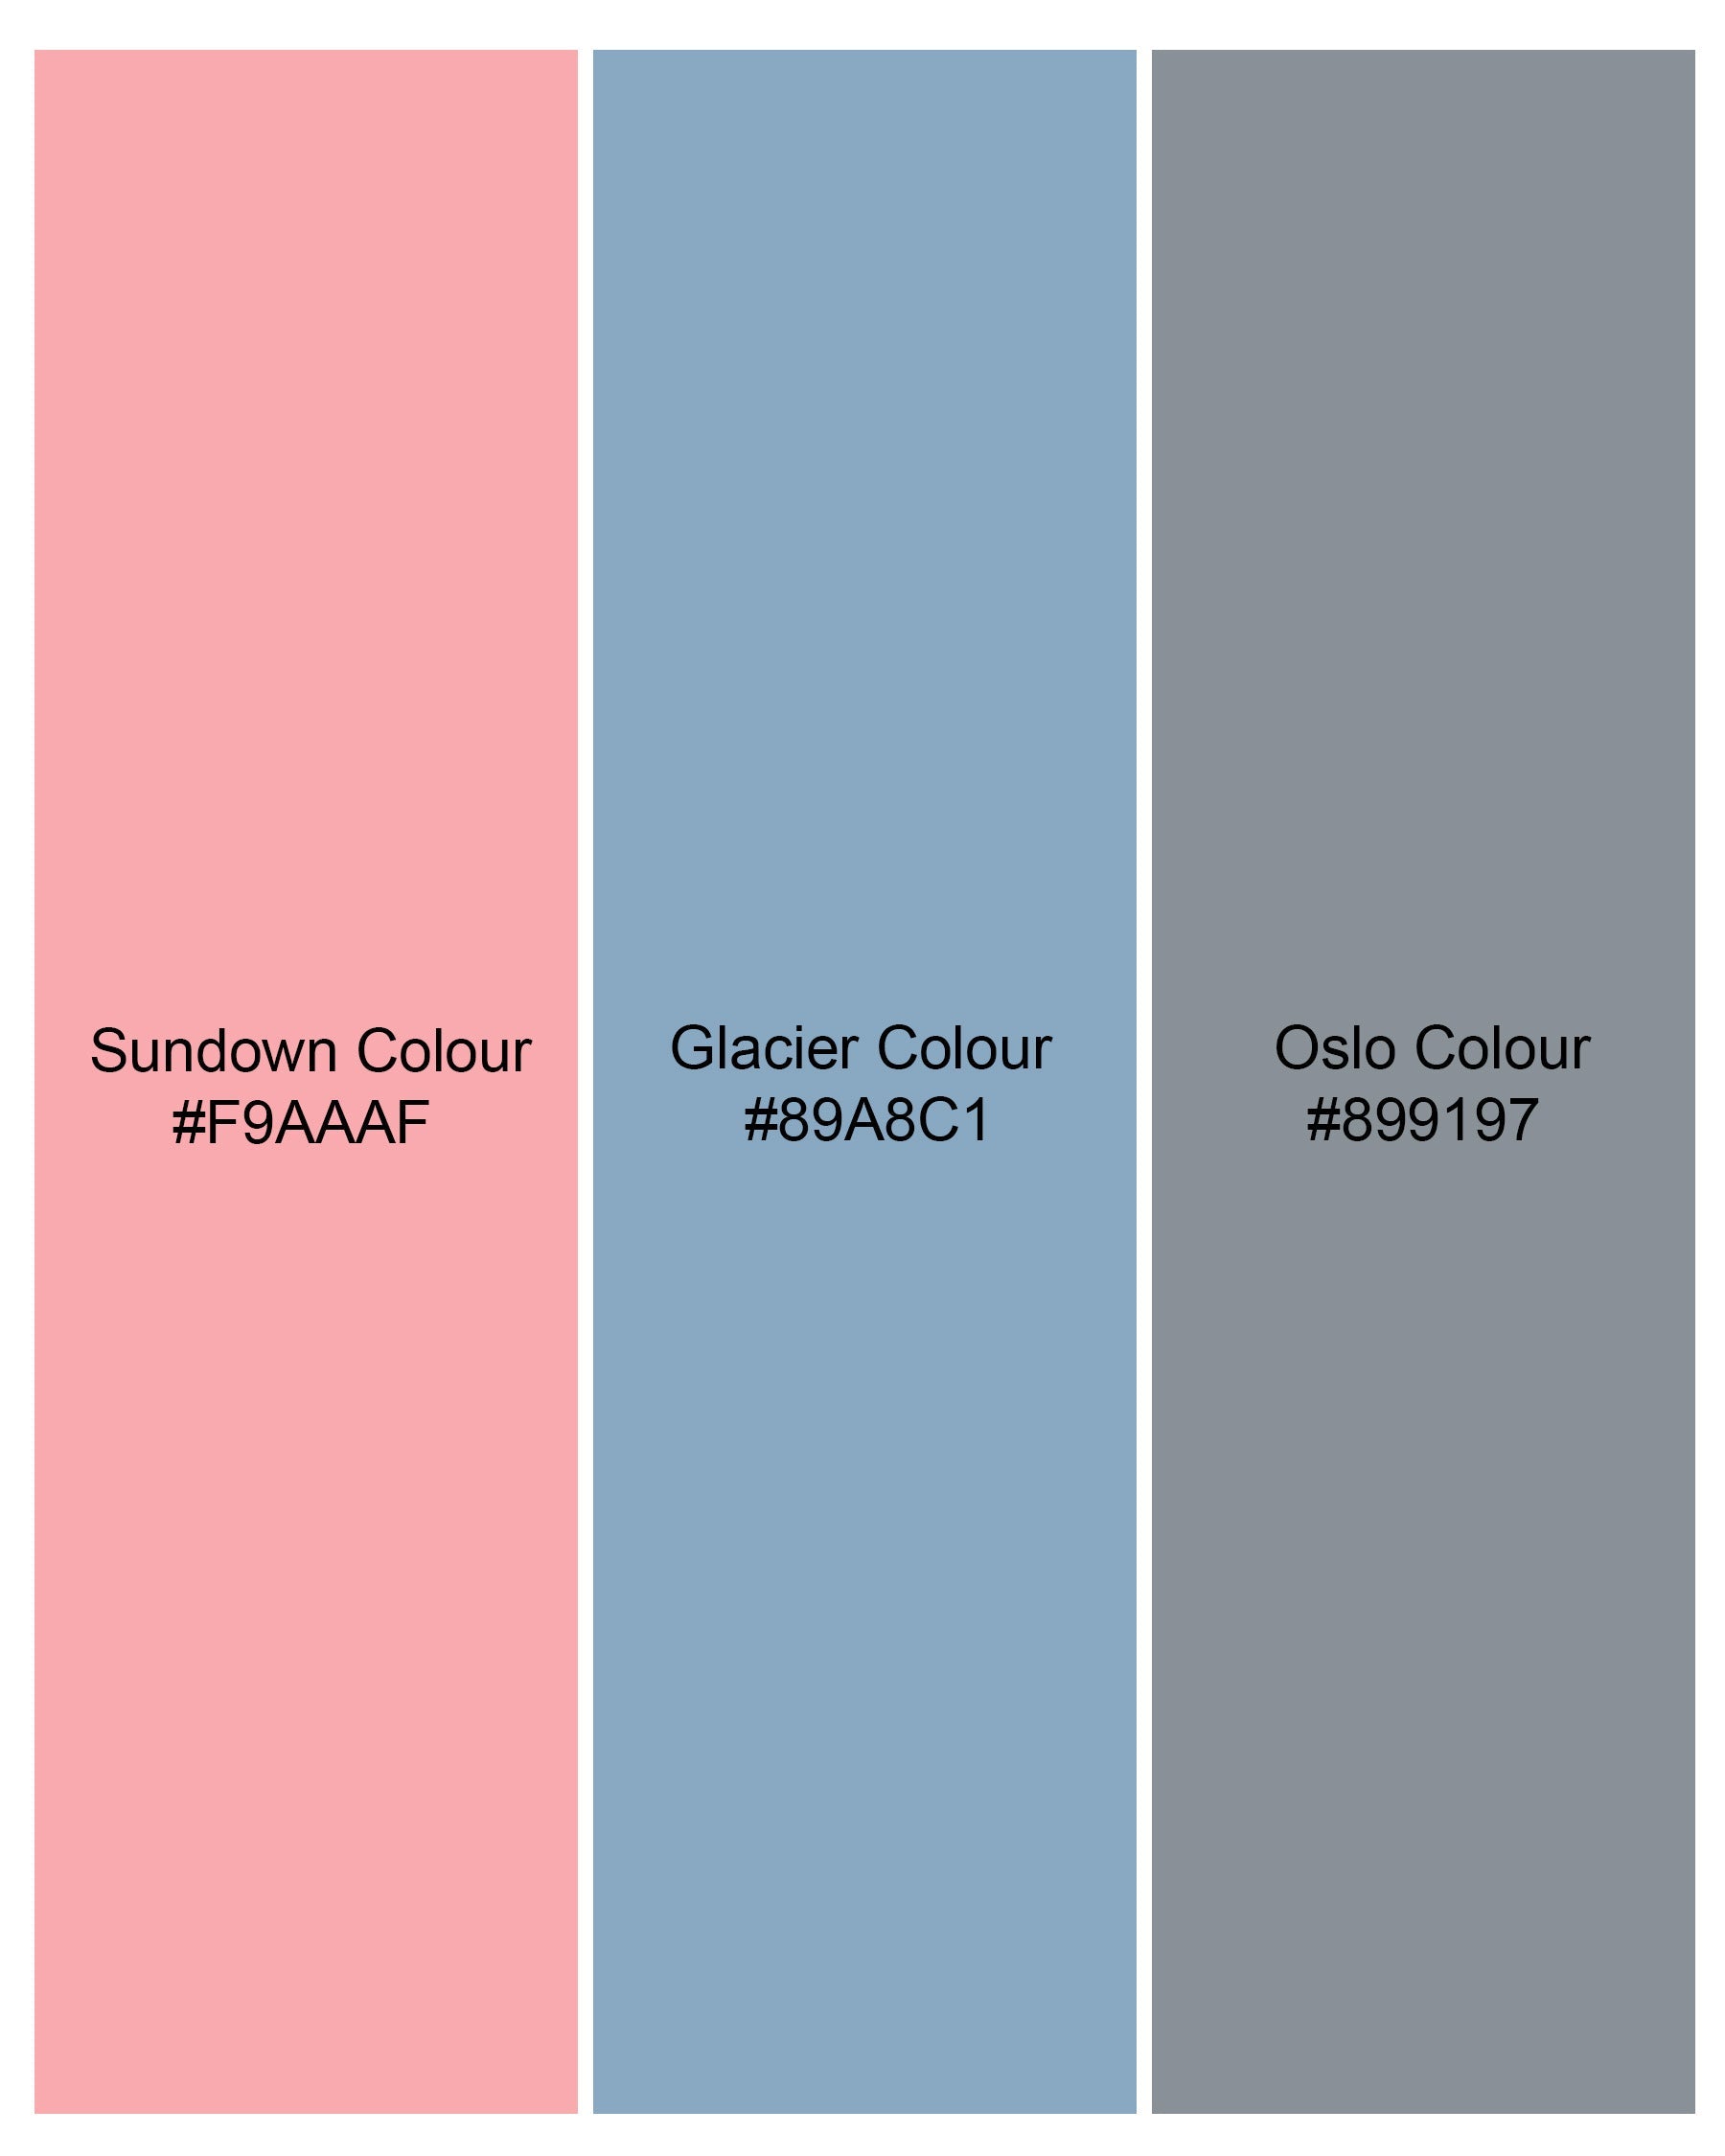 Sundown Light Orange and Glacier Blue Striped Dobby Textured Premium Giza Cotton Shirt 7898 -38,7898 -H-38,7898 -39,7898 -H-39,7898 -40,7898 -H-40,7898 -42,7898 -H-42,7898 -44,7898 -H-44,7898 -46,7898 -H-46,7898 -48,7898 -H-48,7898 -50,7898 -H-50,7898 -52,7898 -H-52